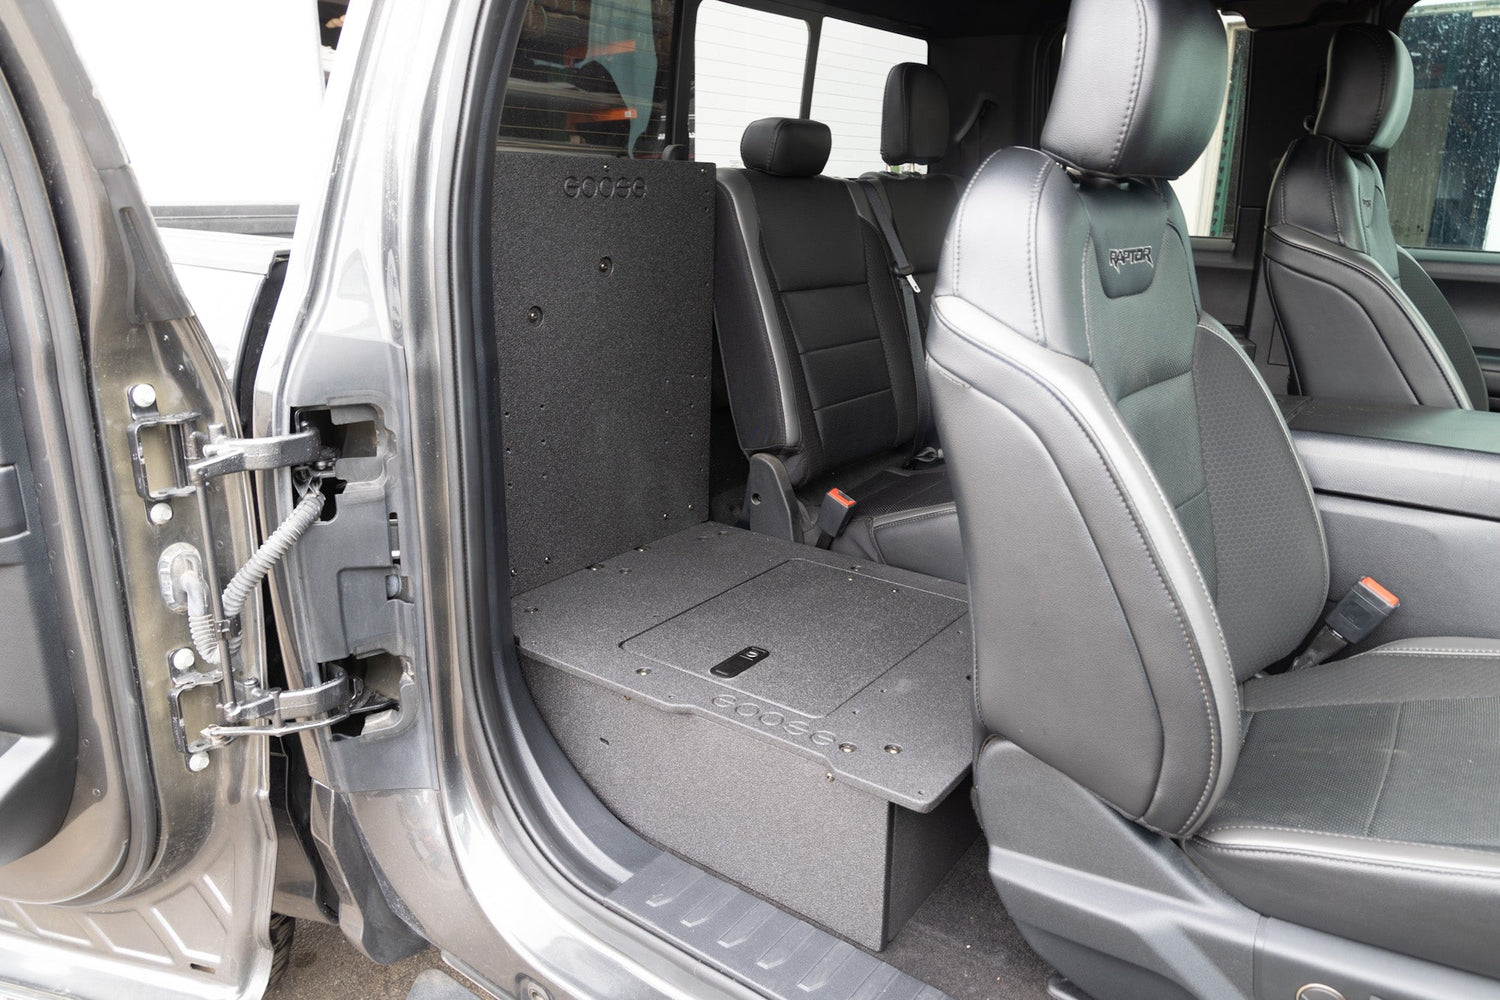 Ford Super Duty F250-F550 2017-Present 4th Gen. Super Cab - Second Row Seat Delete Plate System